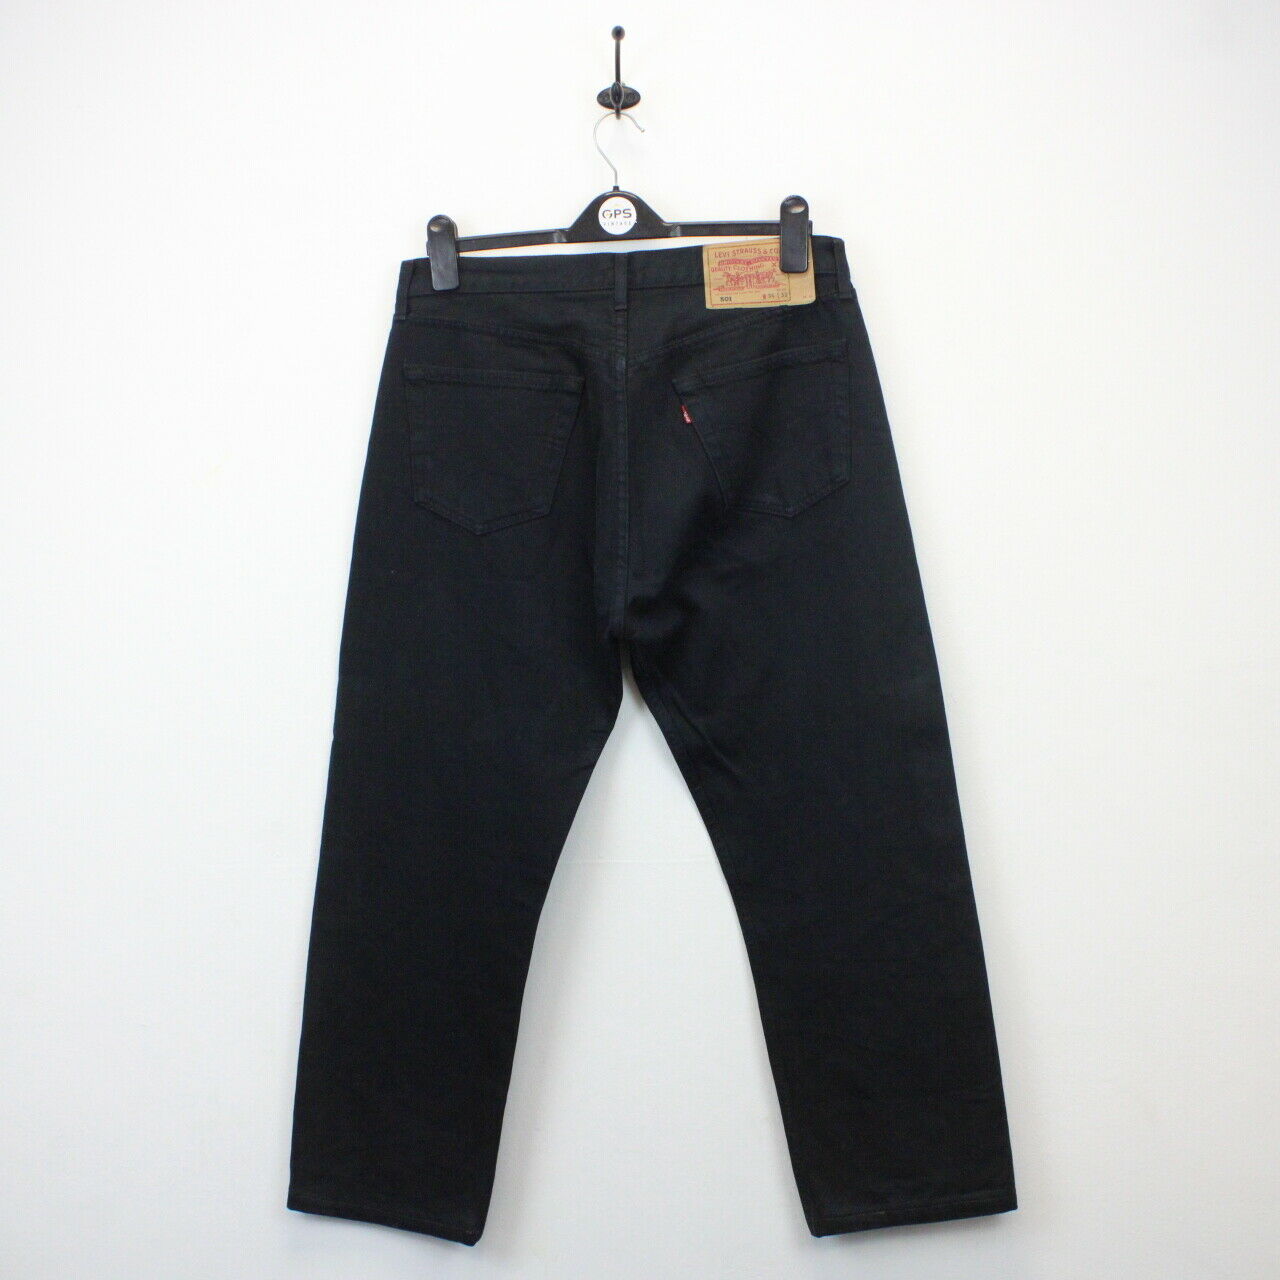 Womens LEVIS 501 Jeans Black | W34 L26